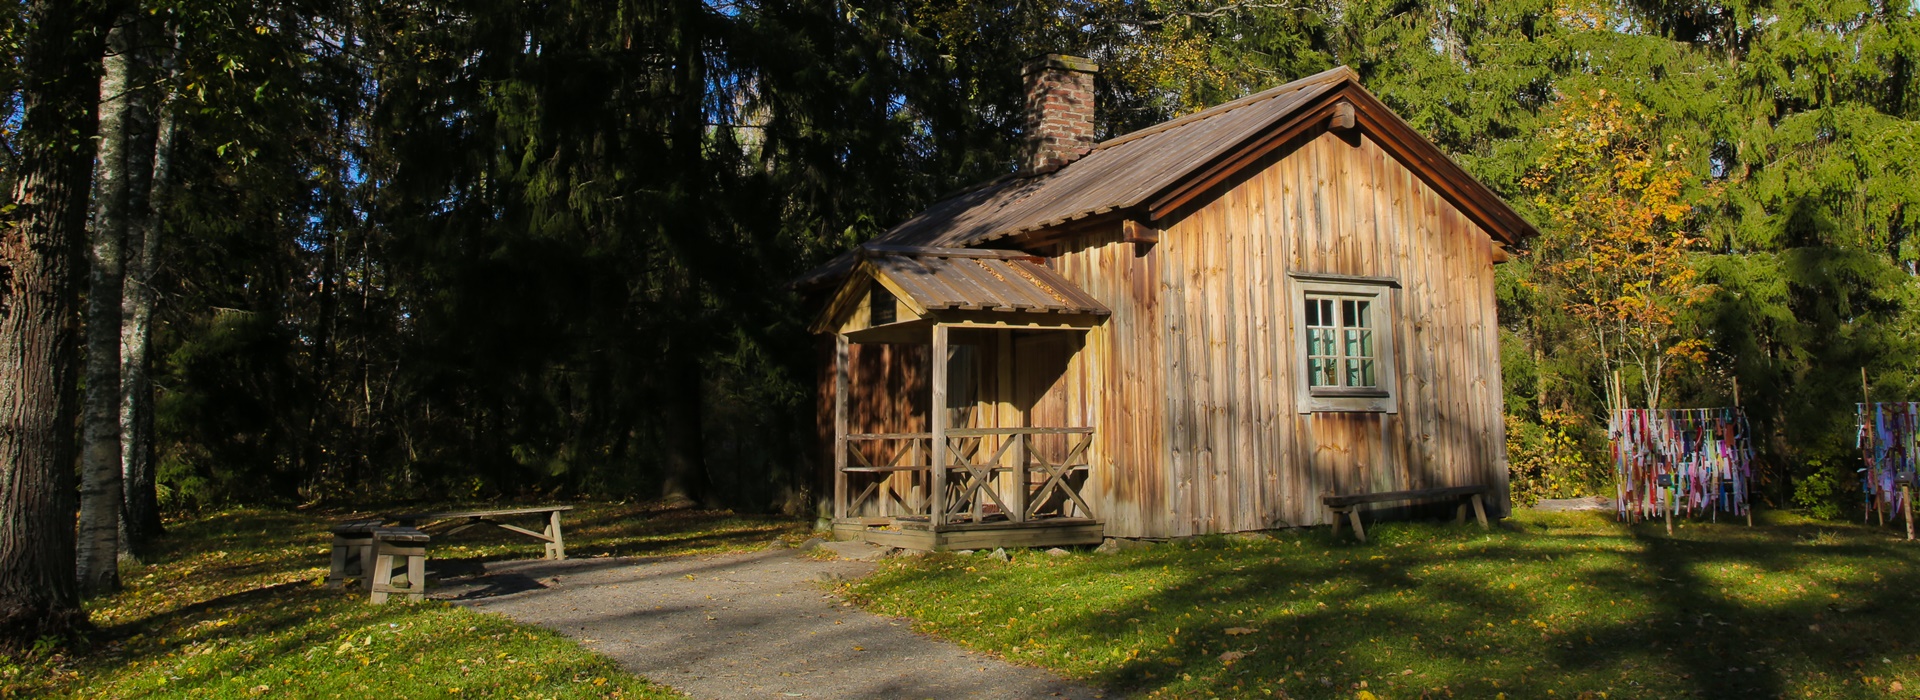 Aleksis Kivi memorial cottage - Visit Tuusulanjärvi